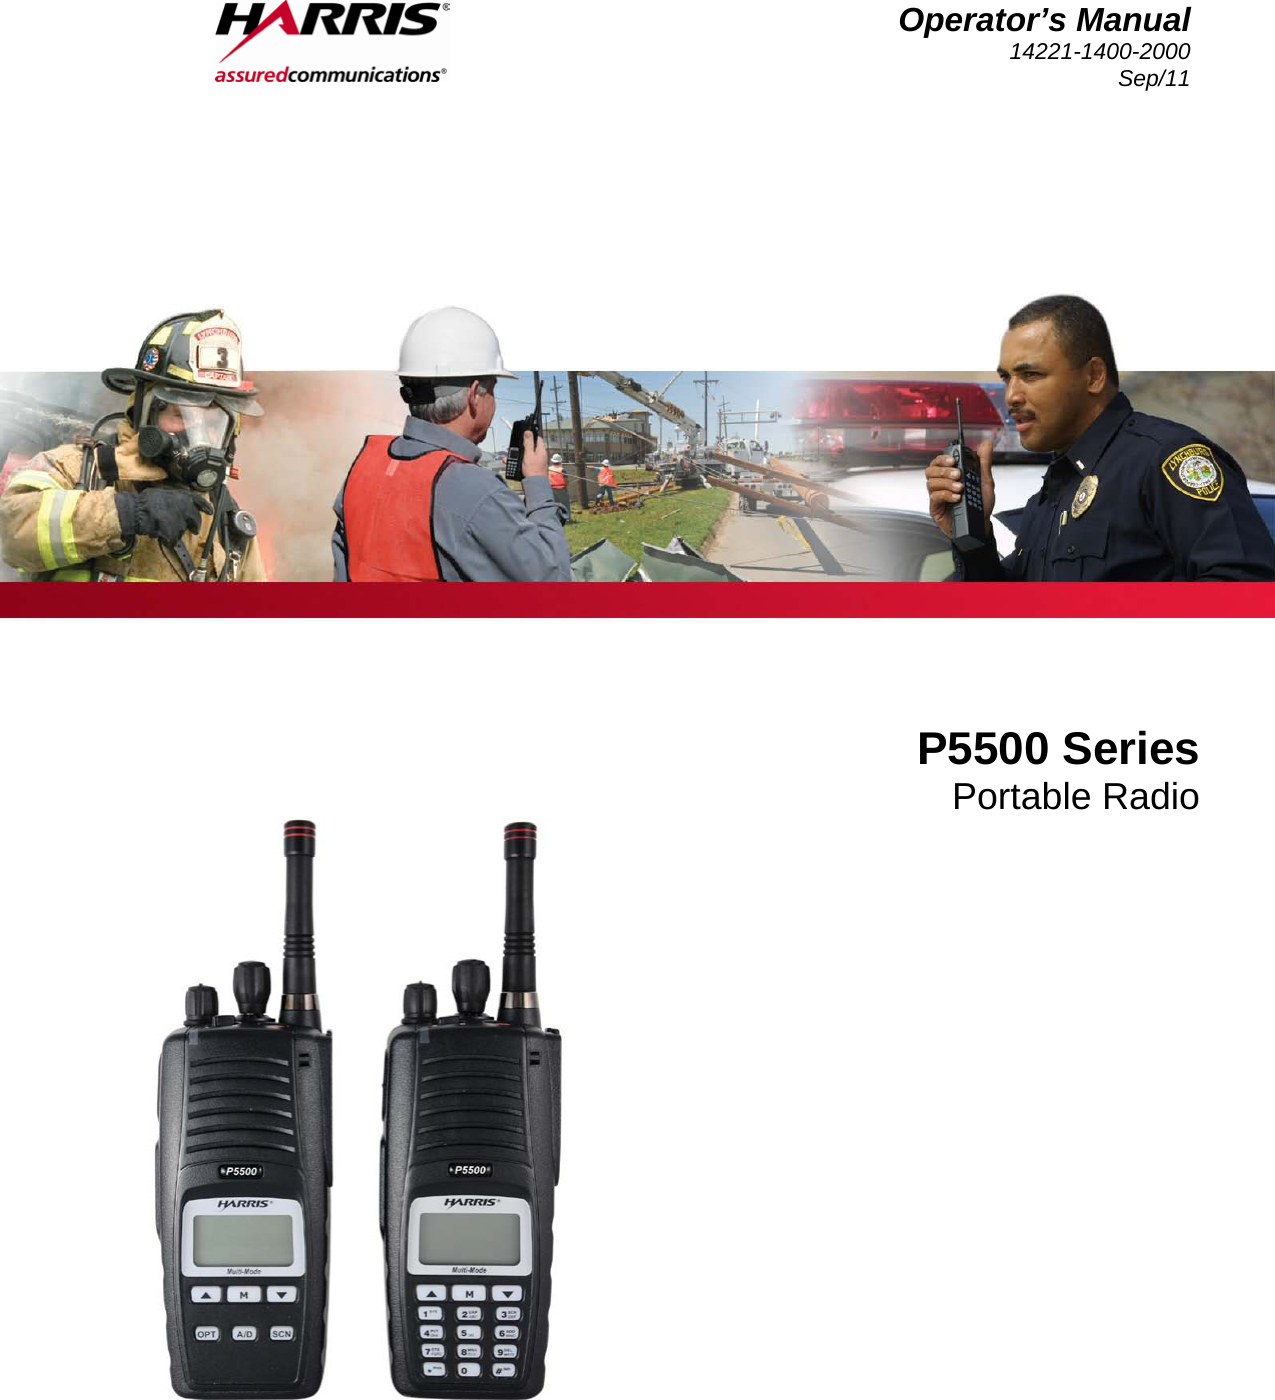  Operator’s Manual 14221-1400-2000 Sep/11     P5500 Series Portable Radio  